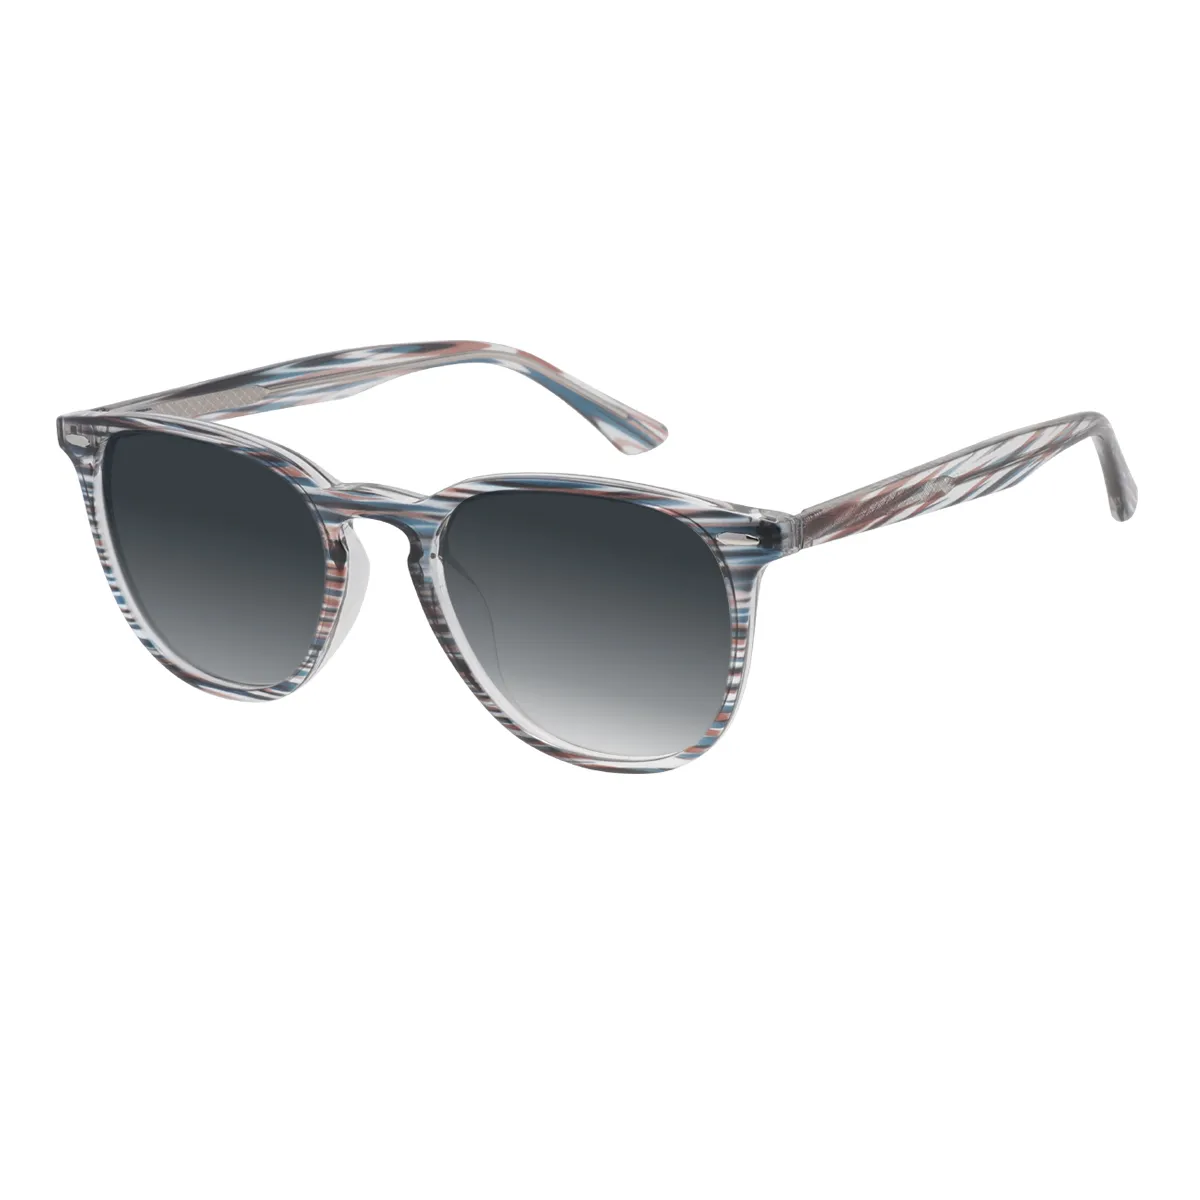 Dobbins - Square Blue Sunglasses for Men & Women